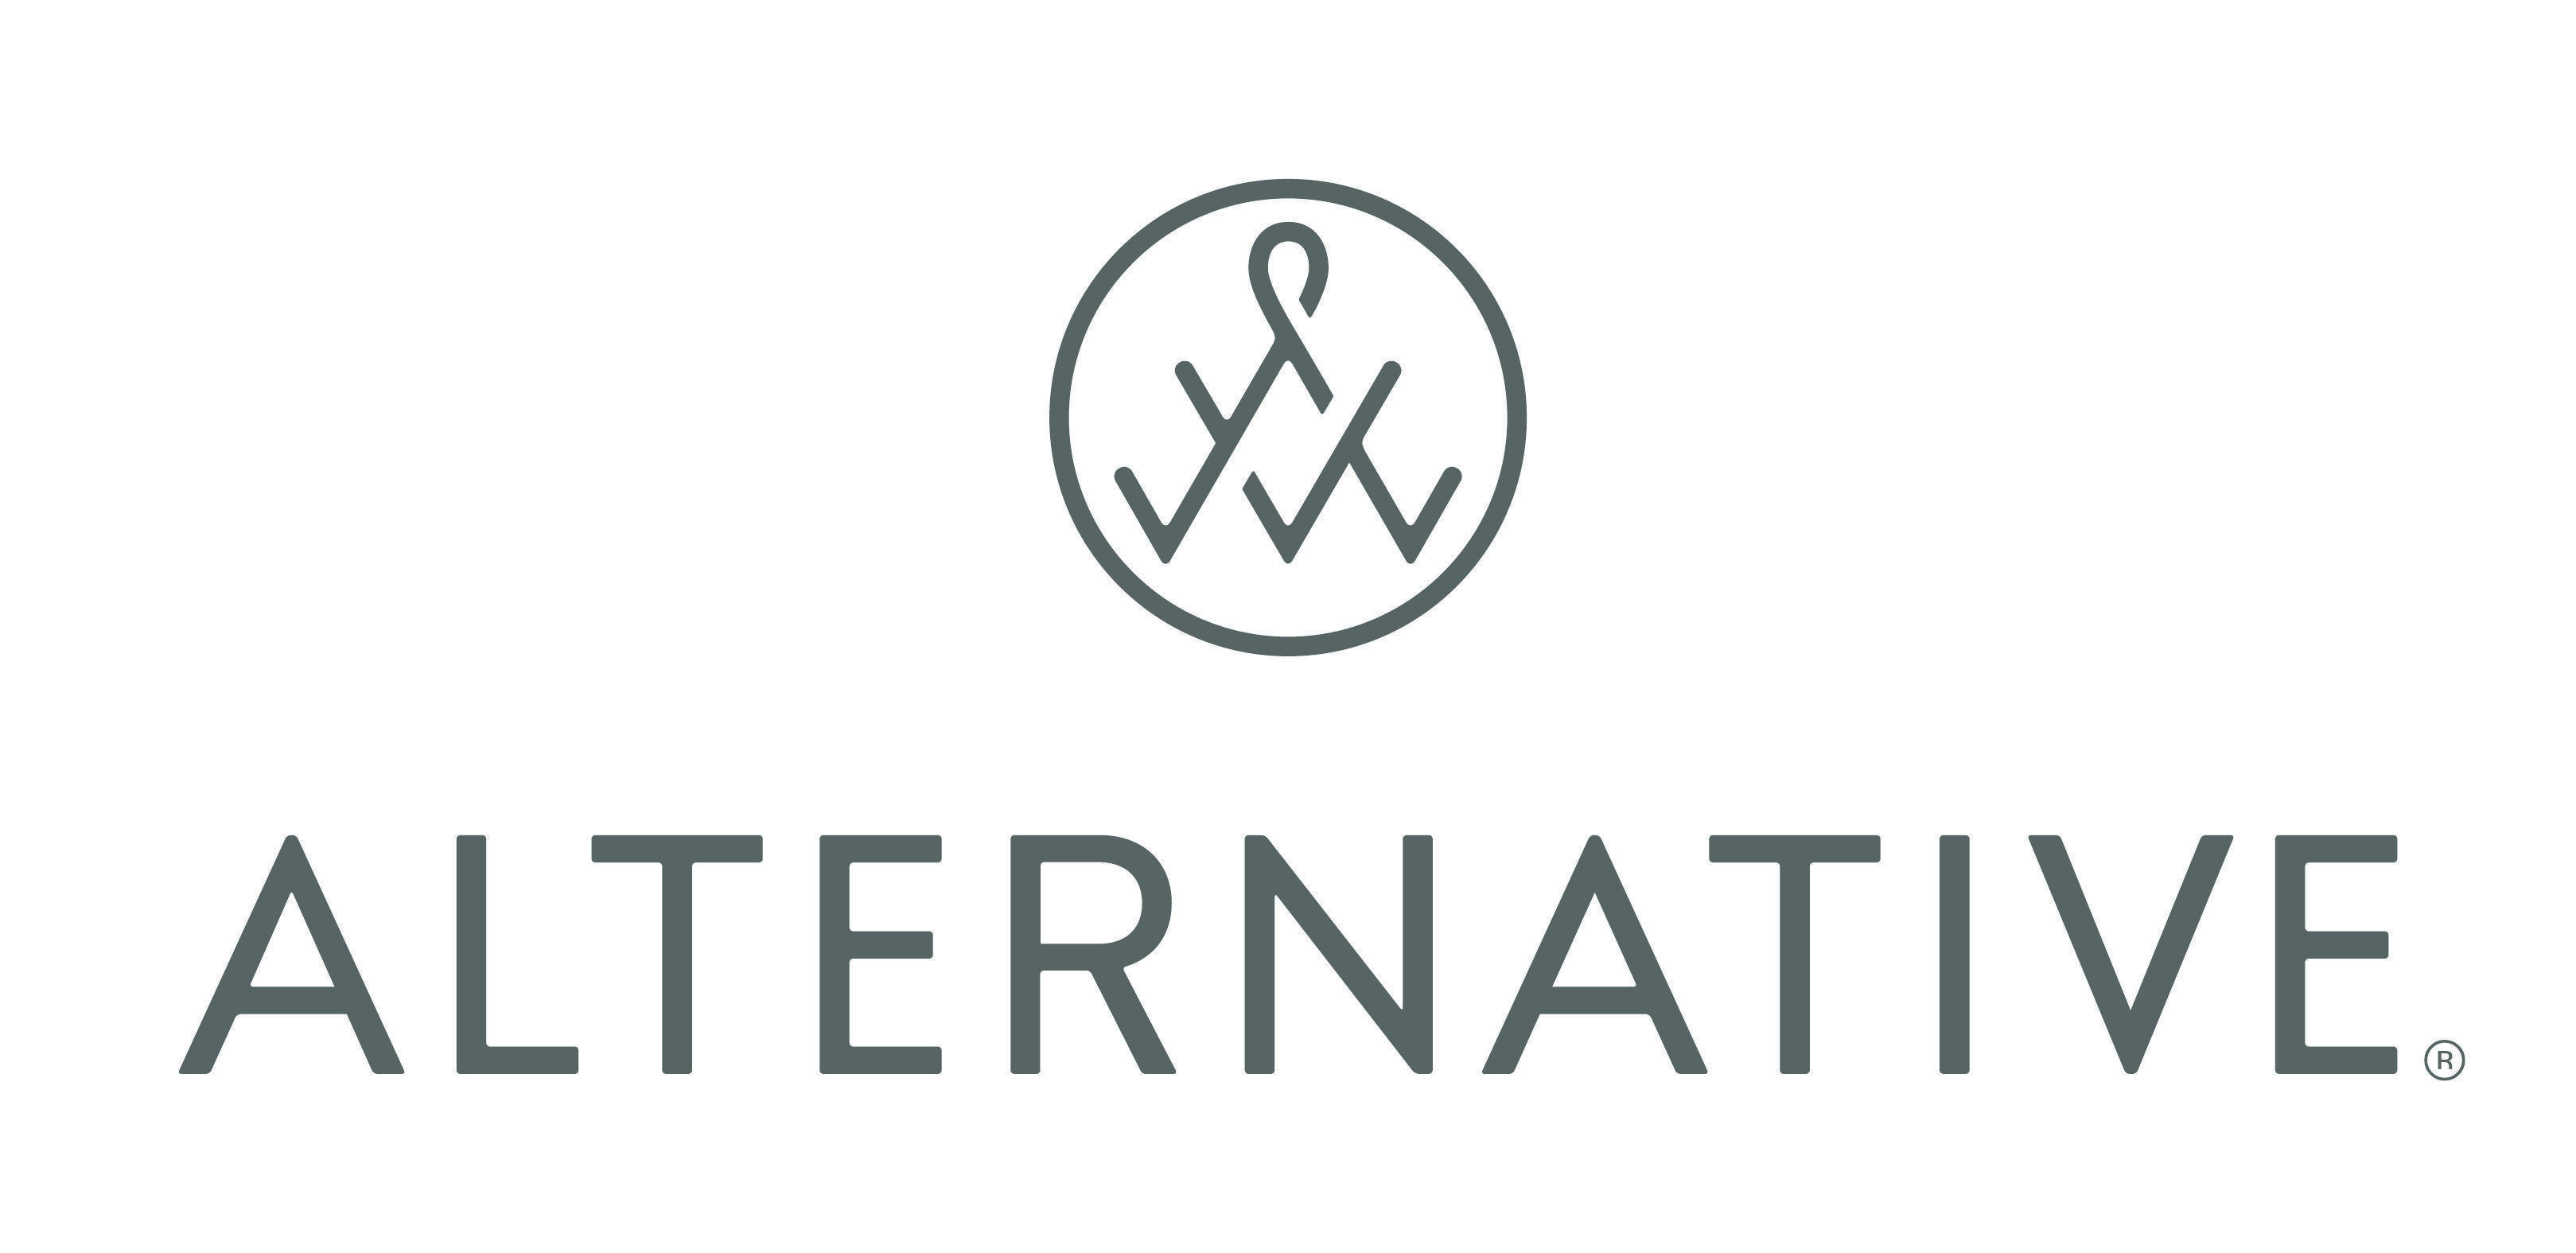 Alternative Logo - Alternative Apparel. Wellmade Companies. Clothing logo, Logos